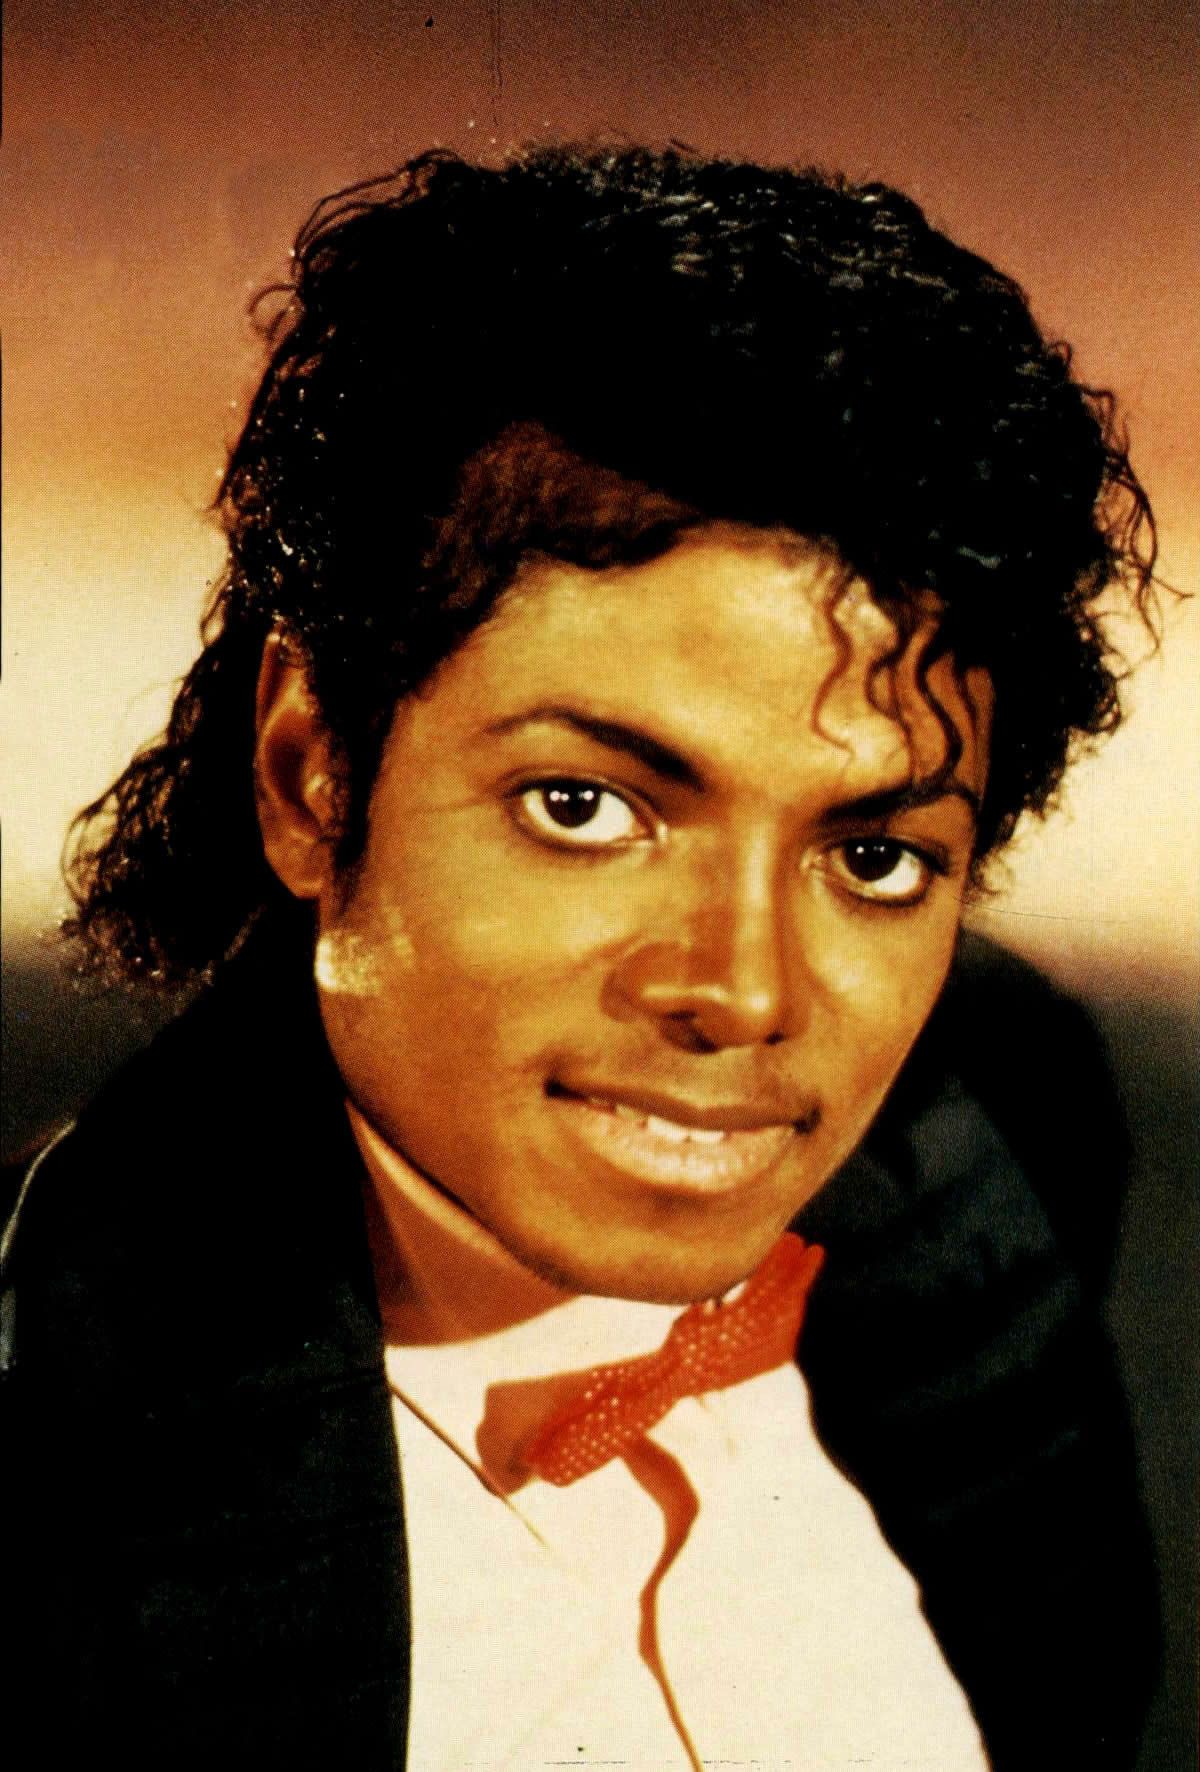 1200x1772px Michael Jackson Billie Jean 292.88 KB